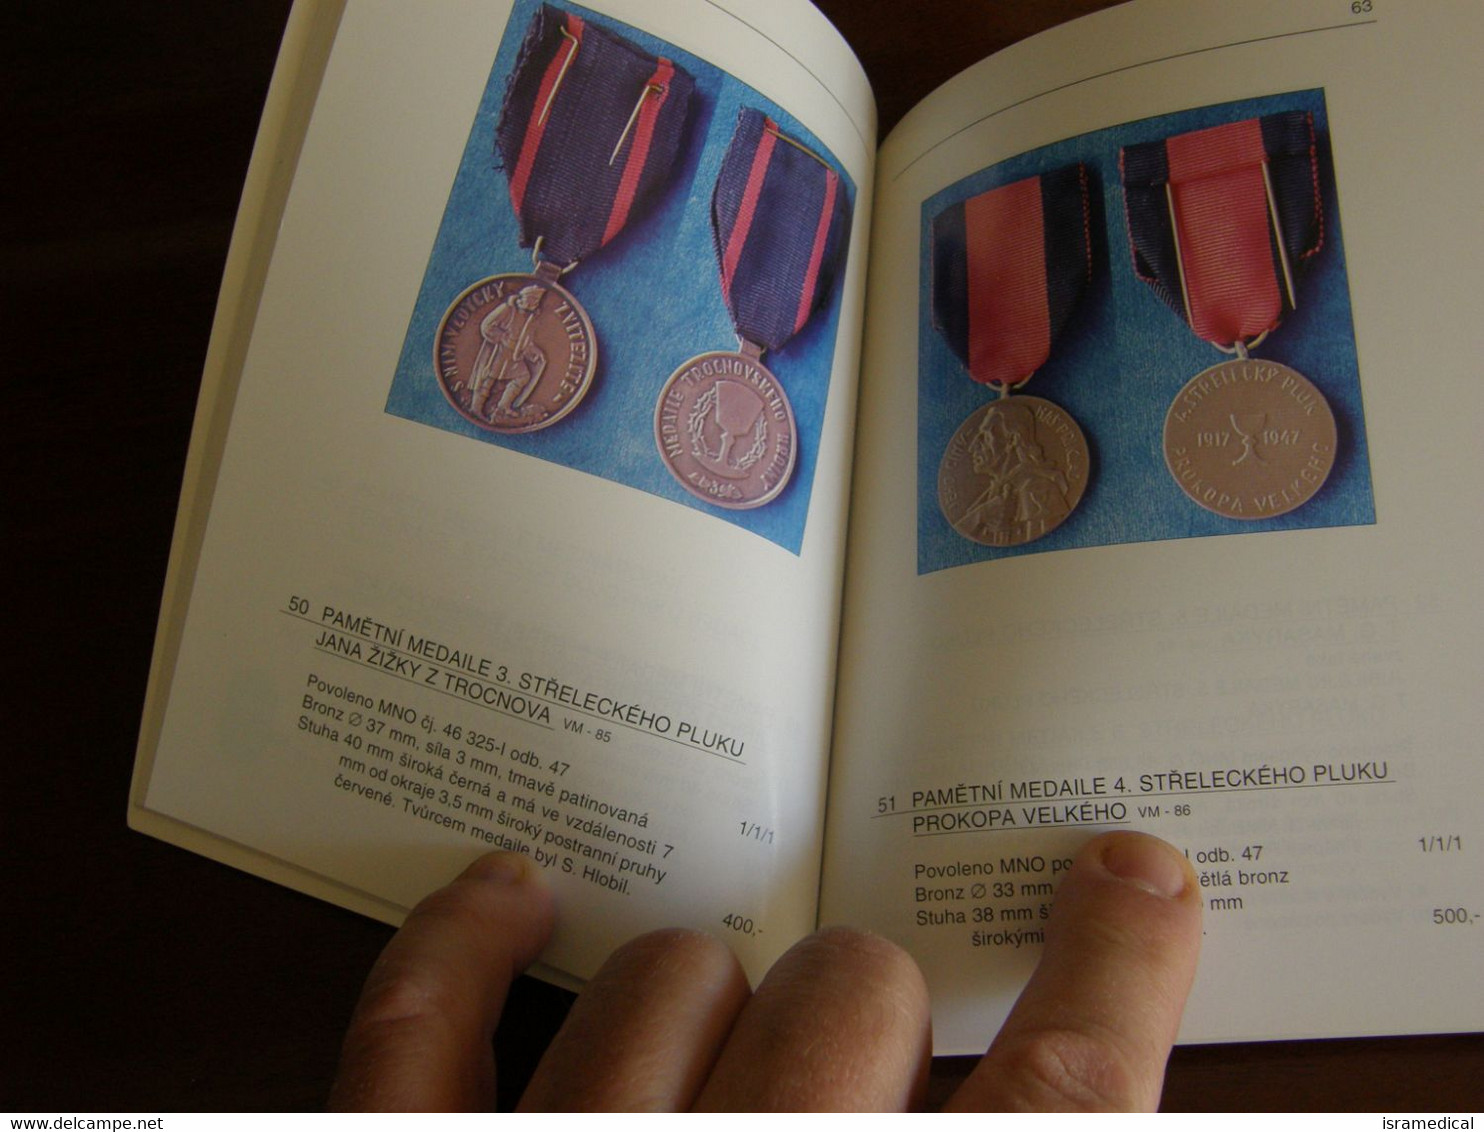 CZECHOSLOVAKIA CATALOGUE OF ORDERS 1918-1948 - Books & CDs